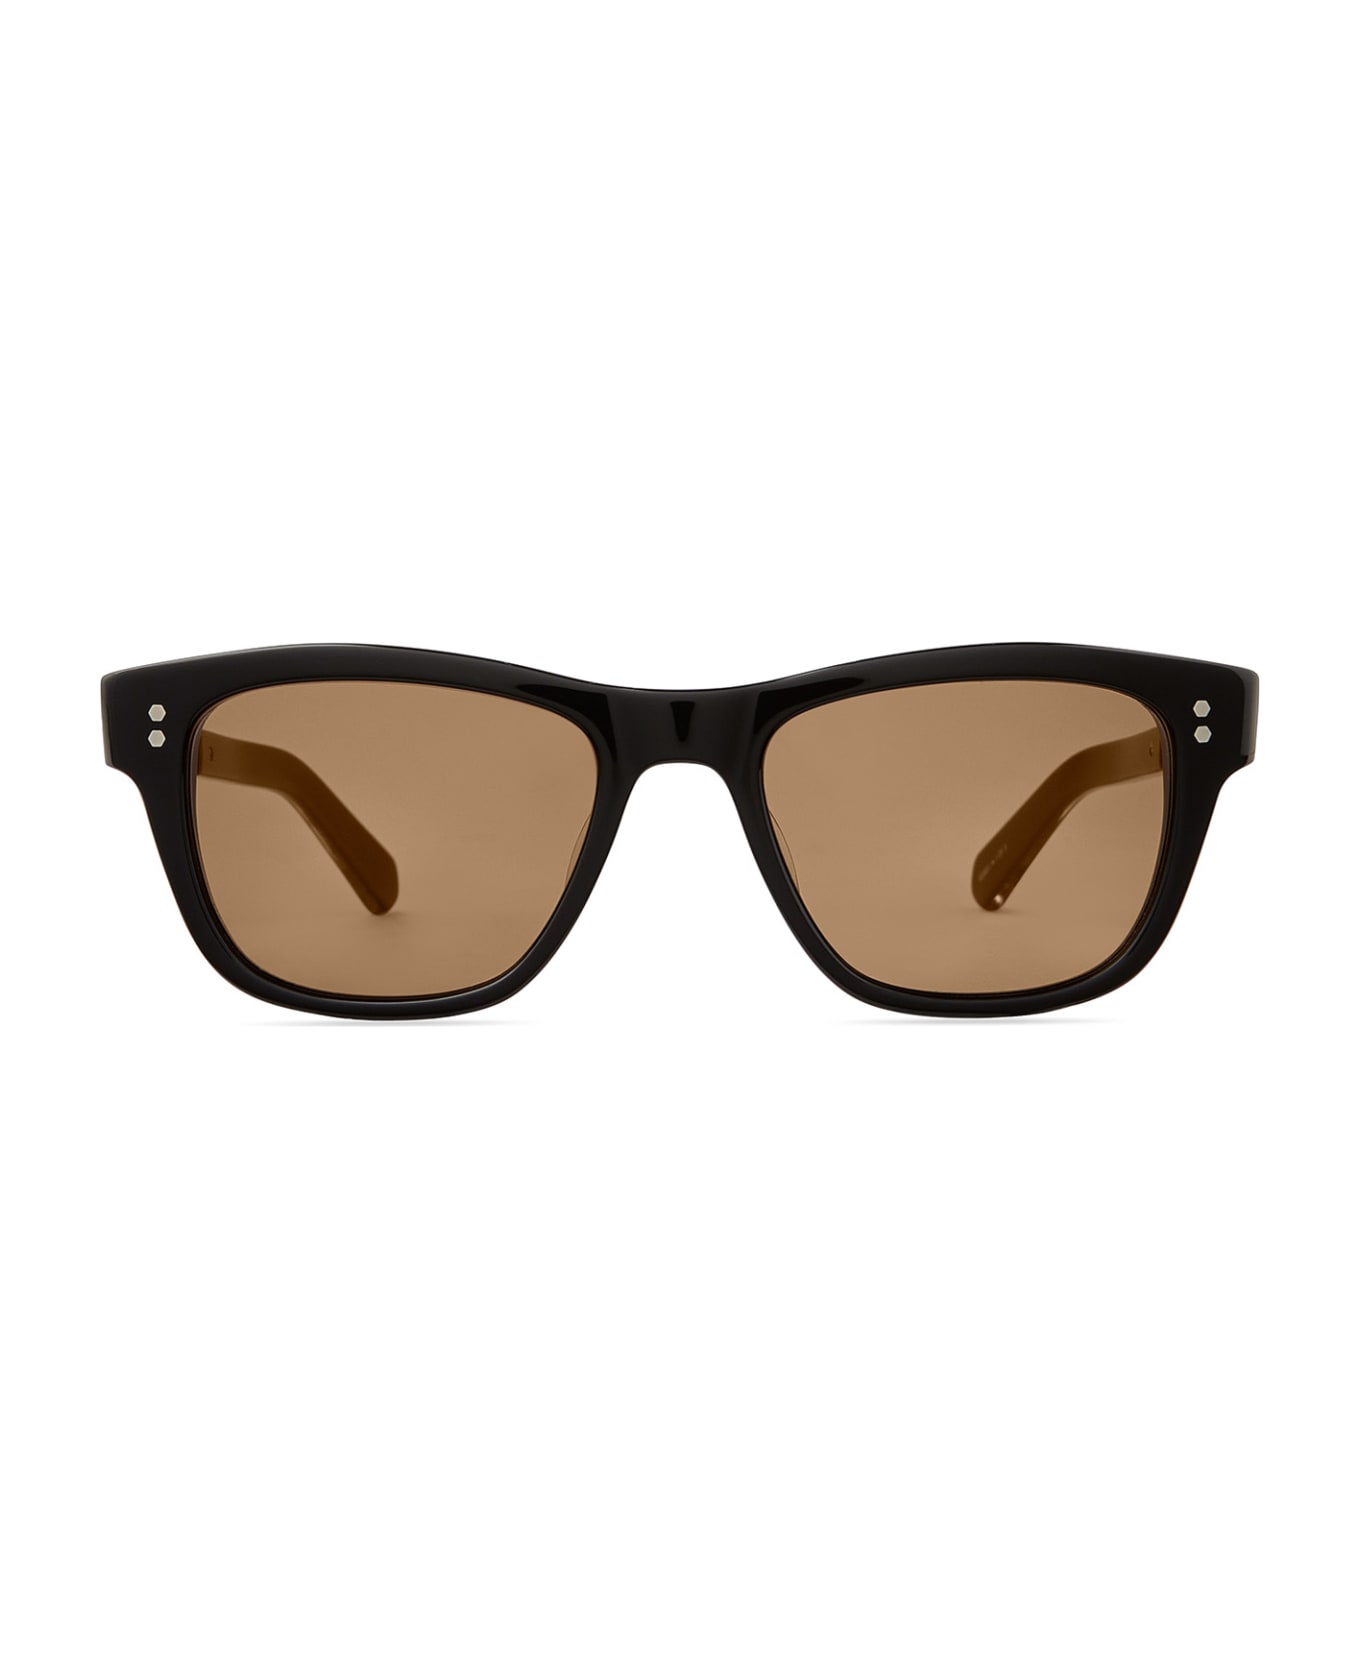 Mr. Leight Damone S Black-gunmetal/mojave Brown Polar Sunglasses - Black-Gunmetal/Mojave Brown Polar